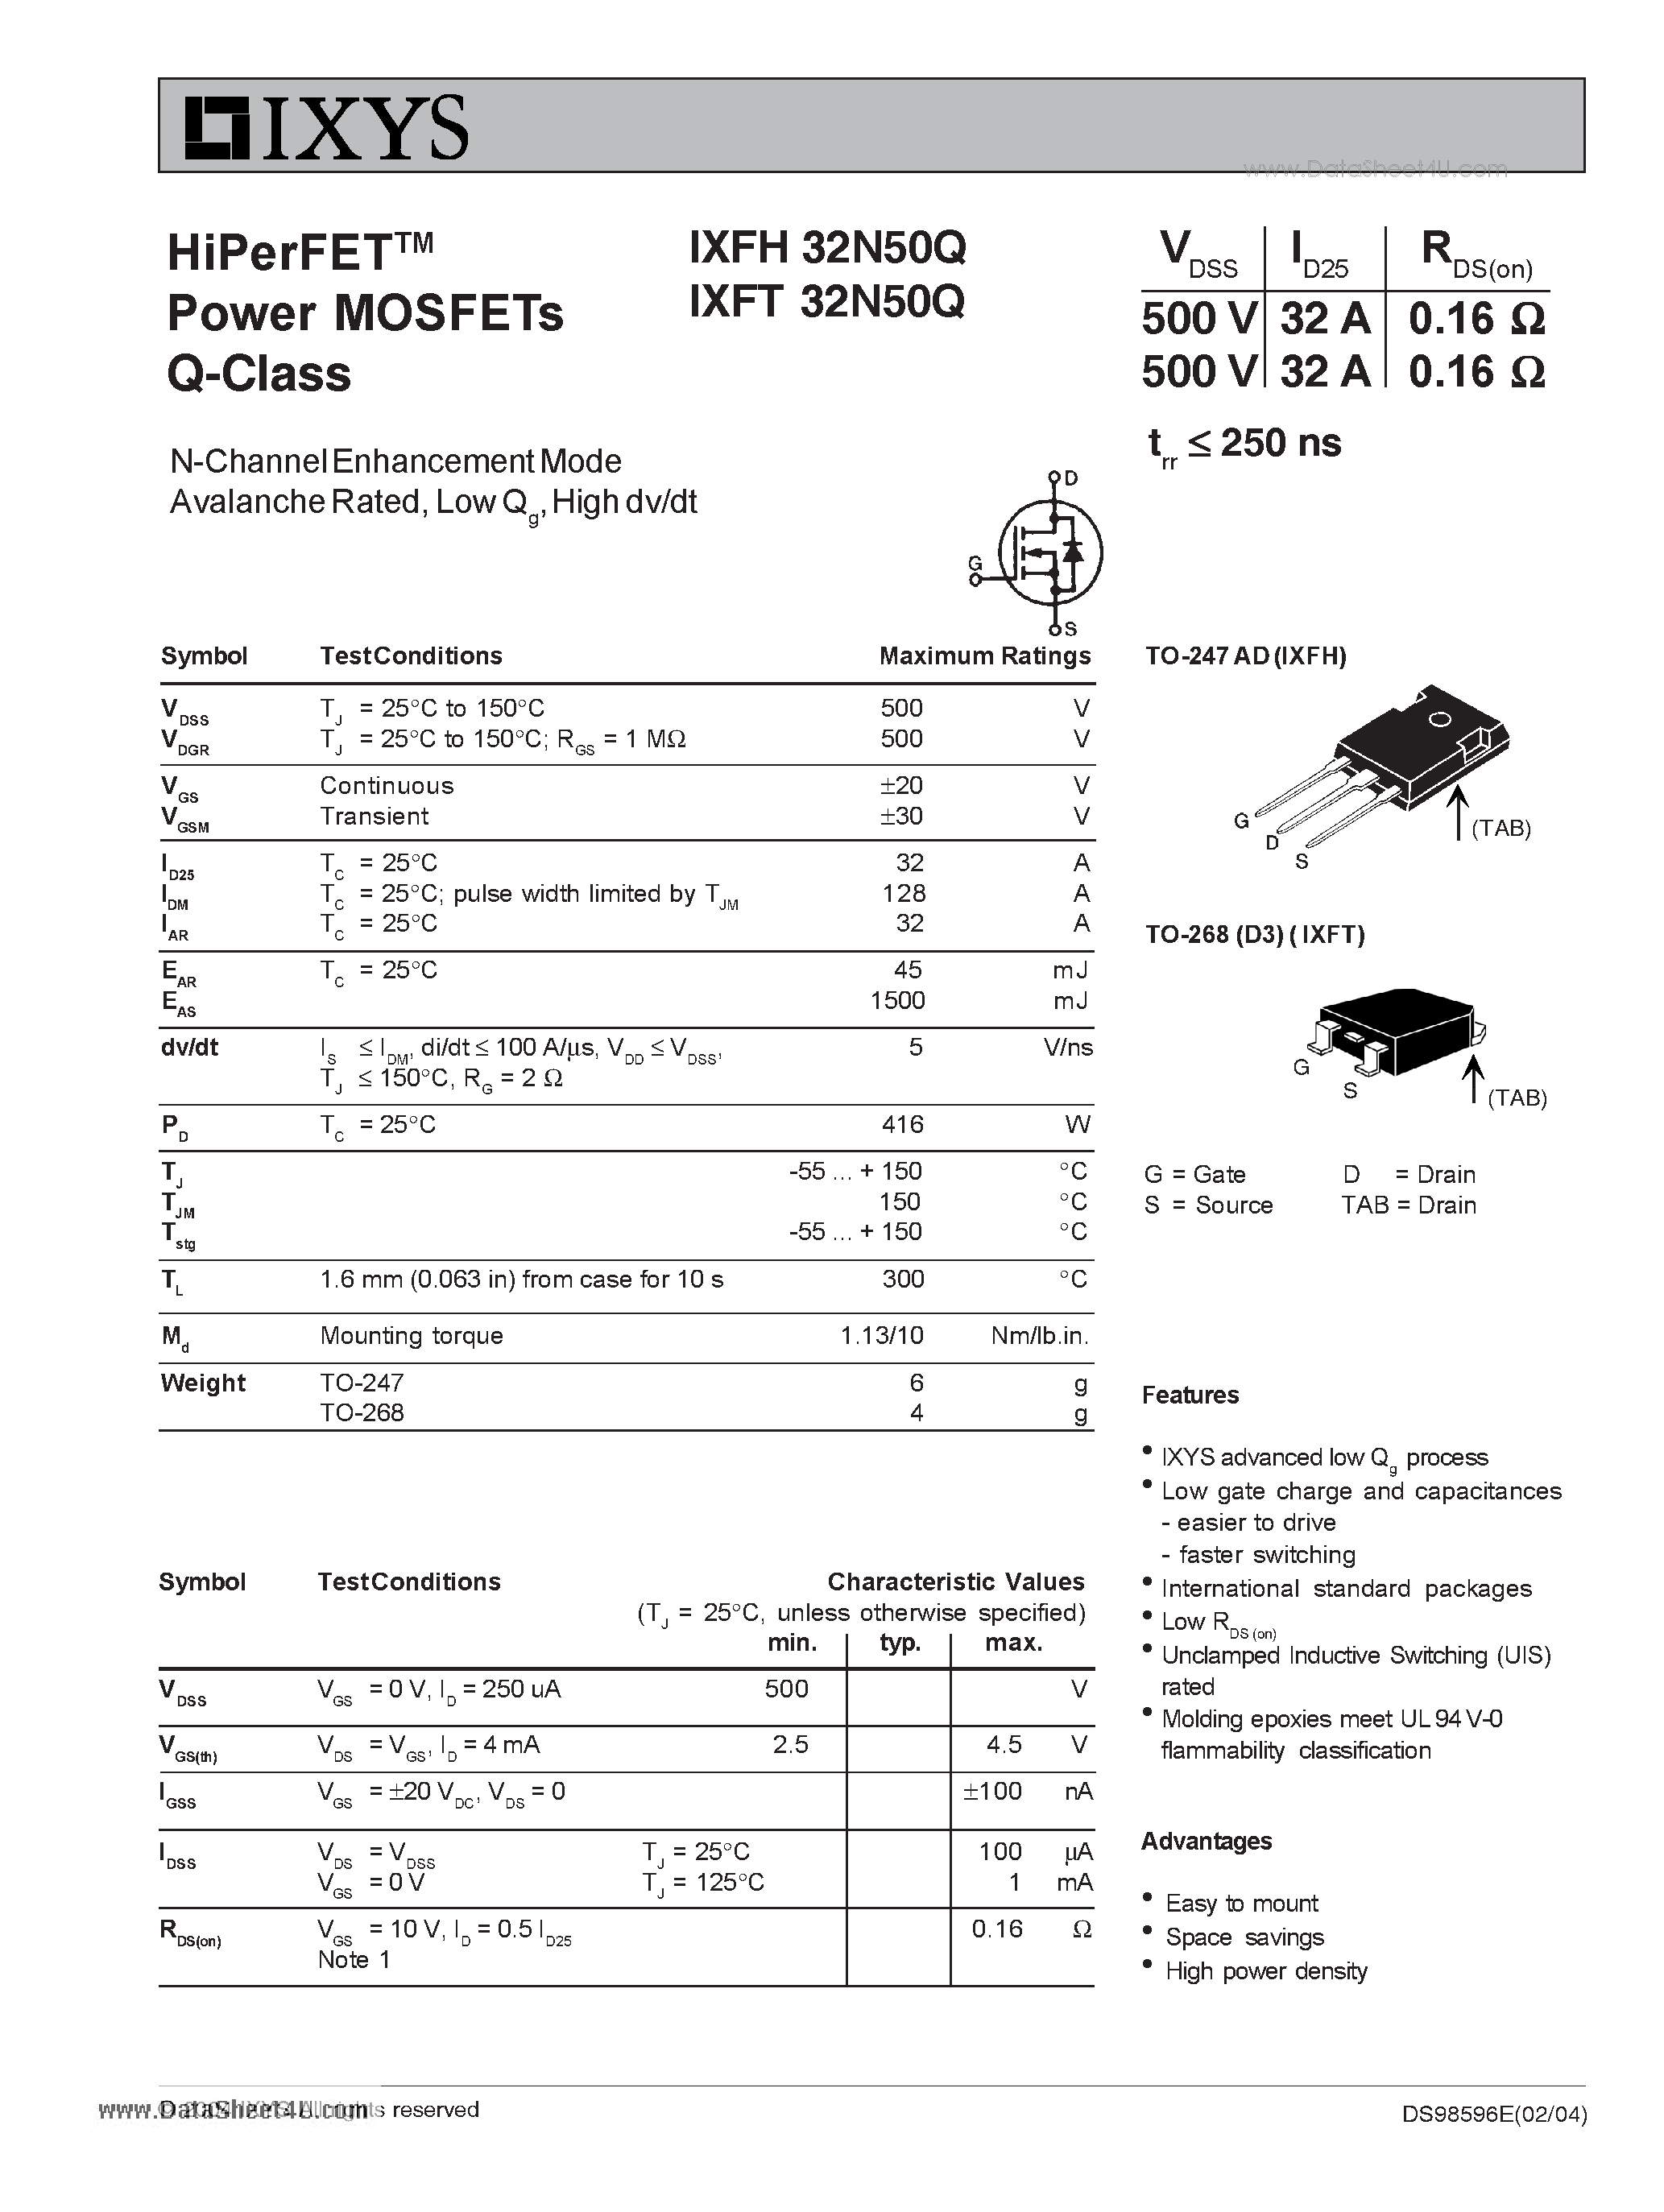 Datasheet IXFH32N50Q - HiPerFET Power MOSFETs Q-Class page 1